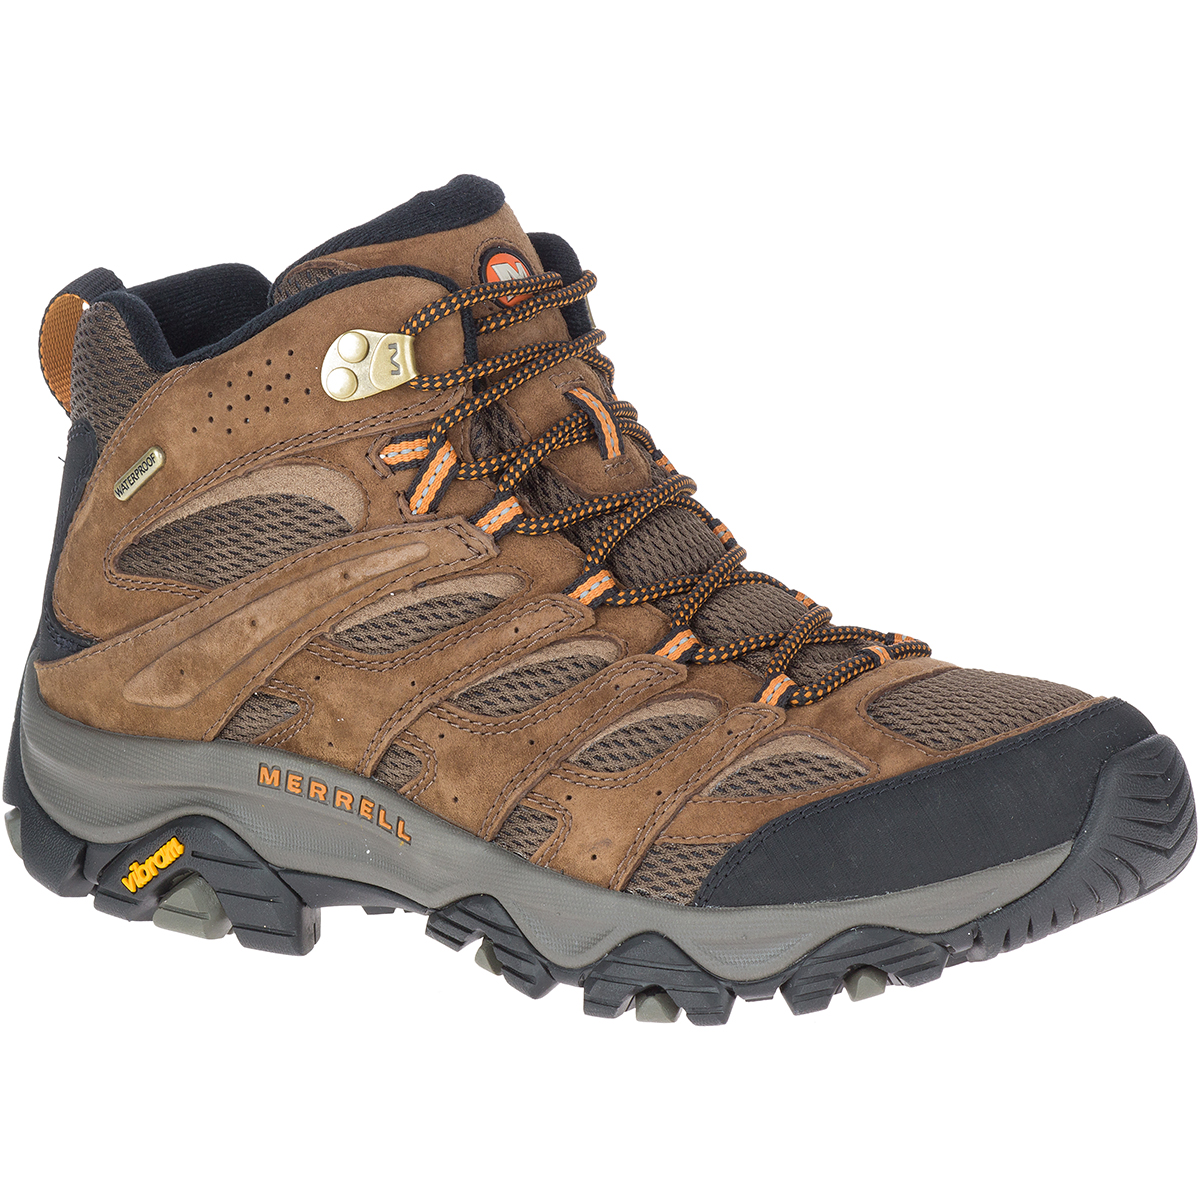 Men's Moab 3 Mid Waterproof Hiking Boots, Wide